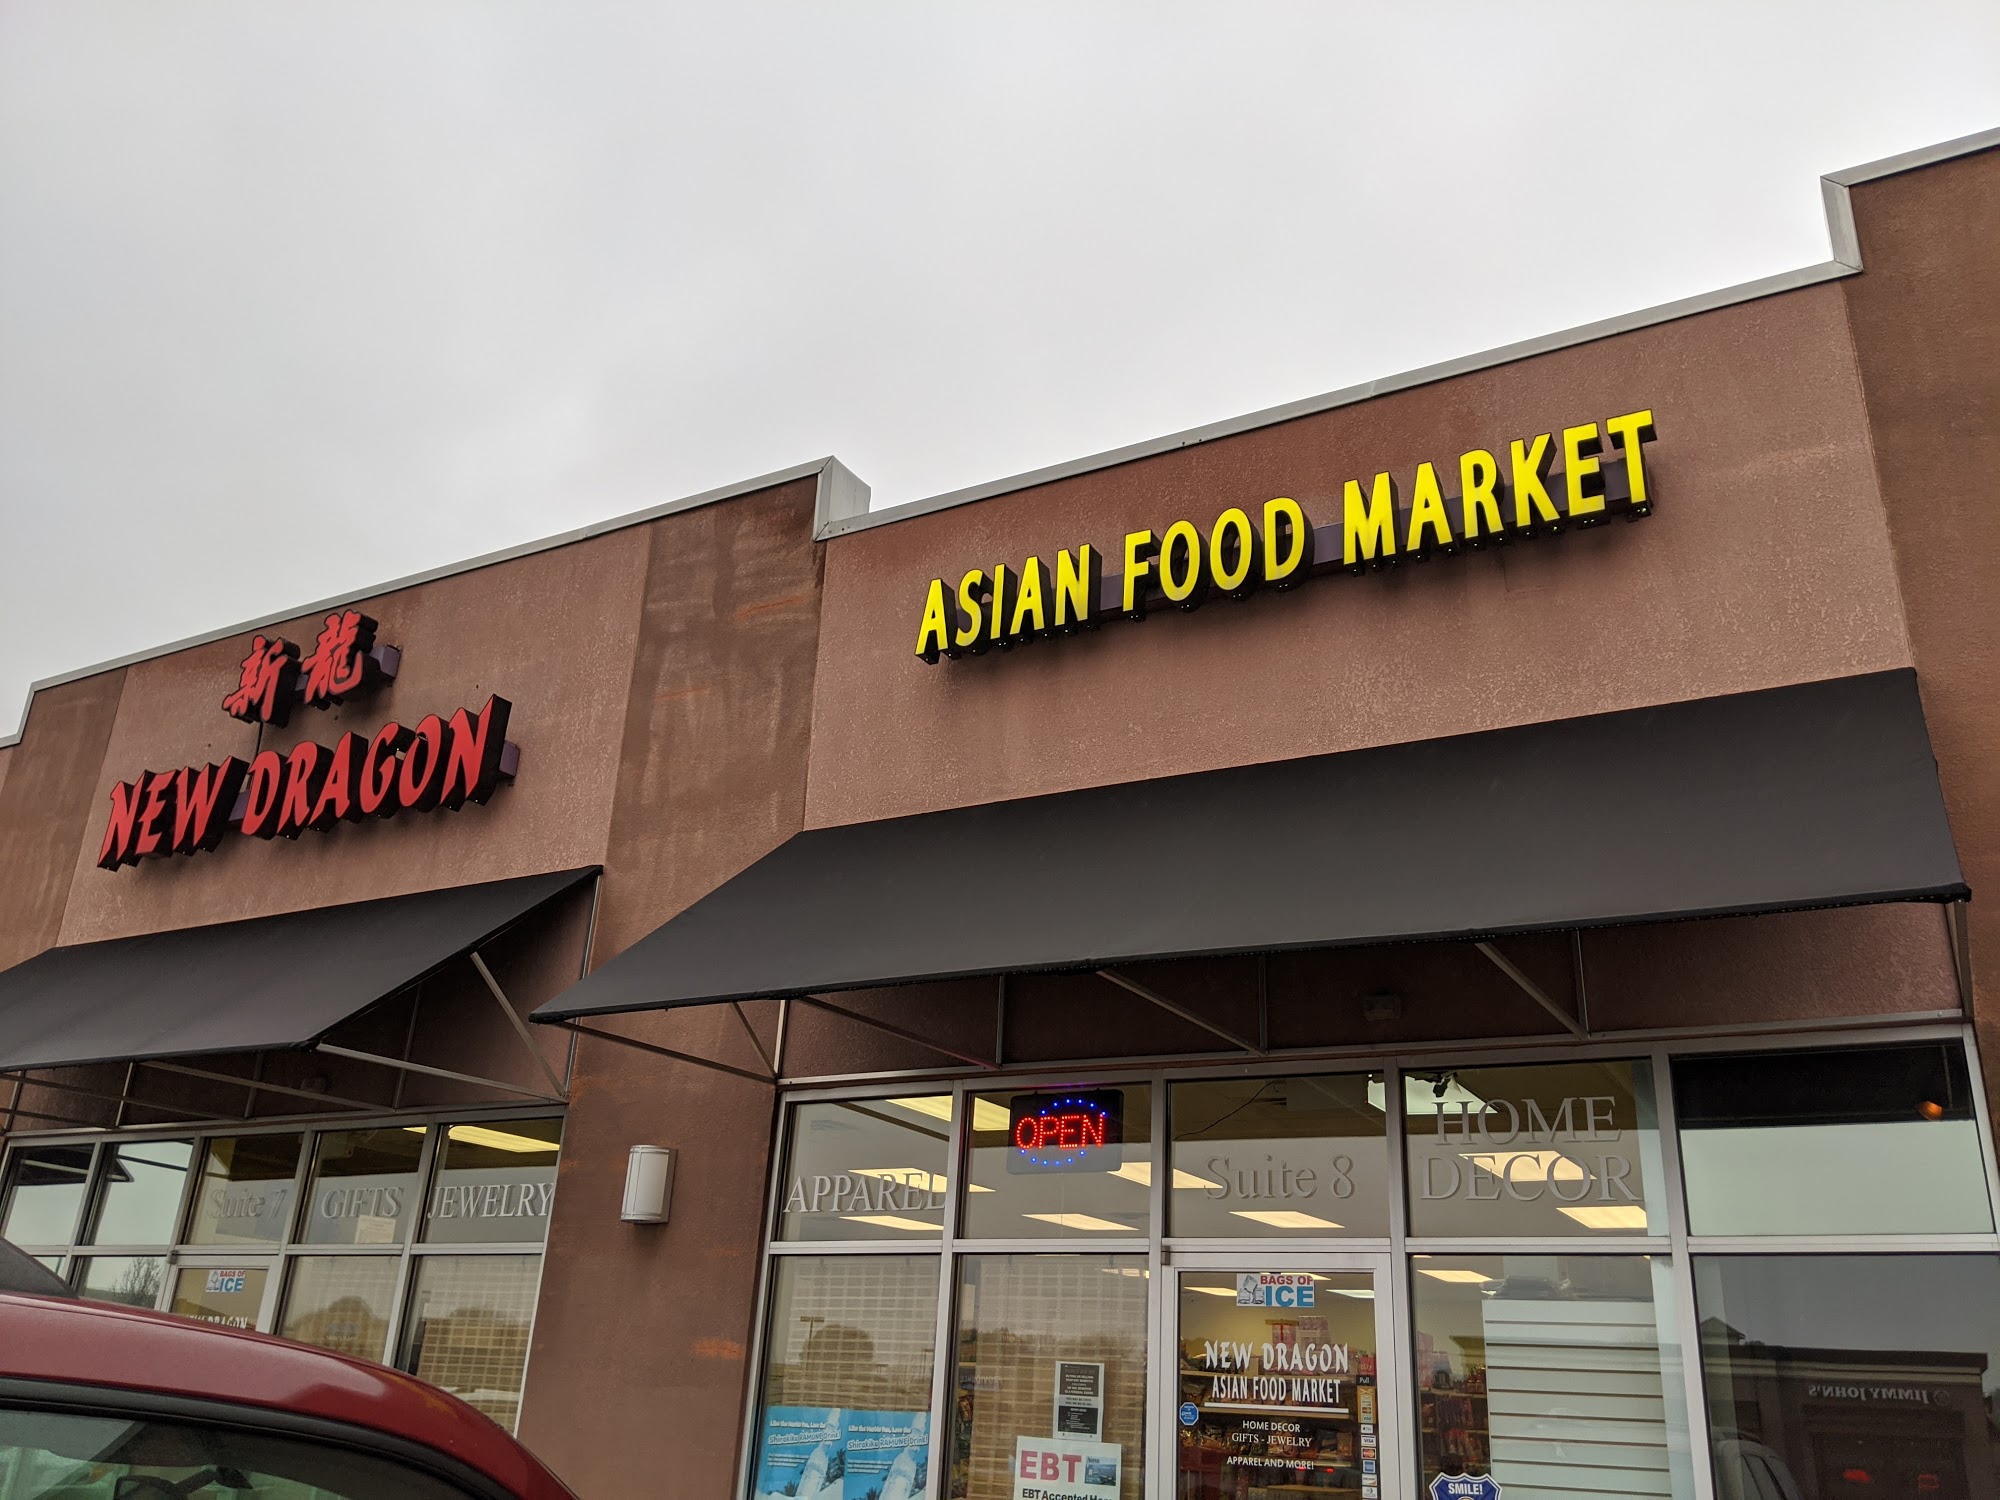 New Dragon Asian Food Market